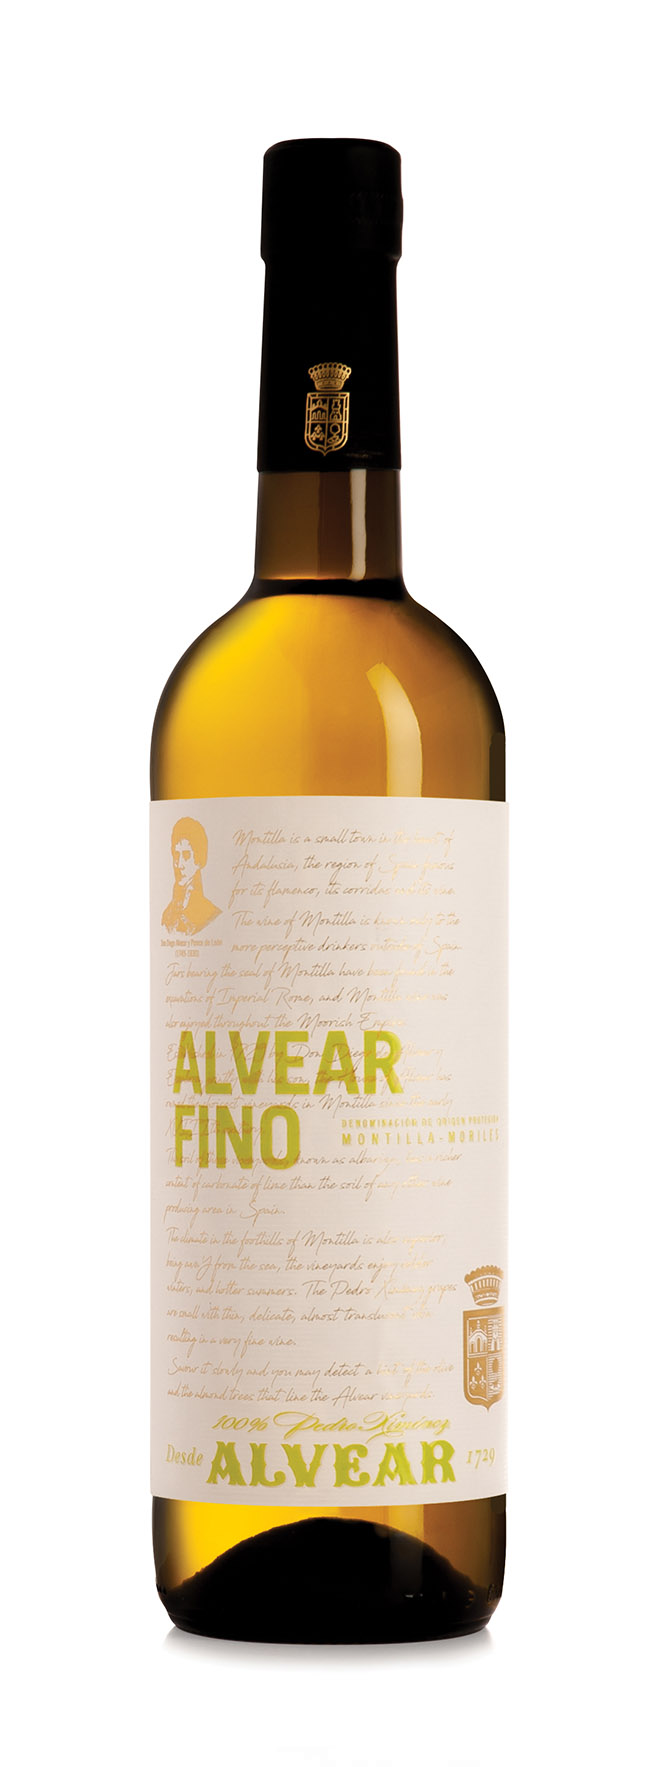 Alvear Fino Bottle Photo